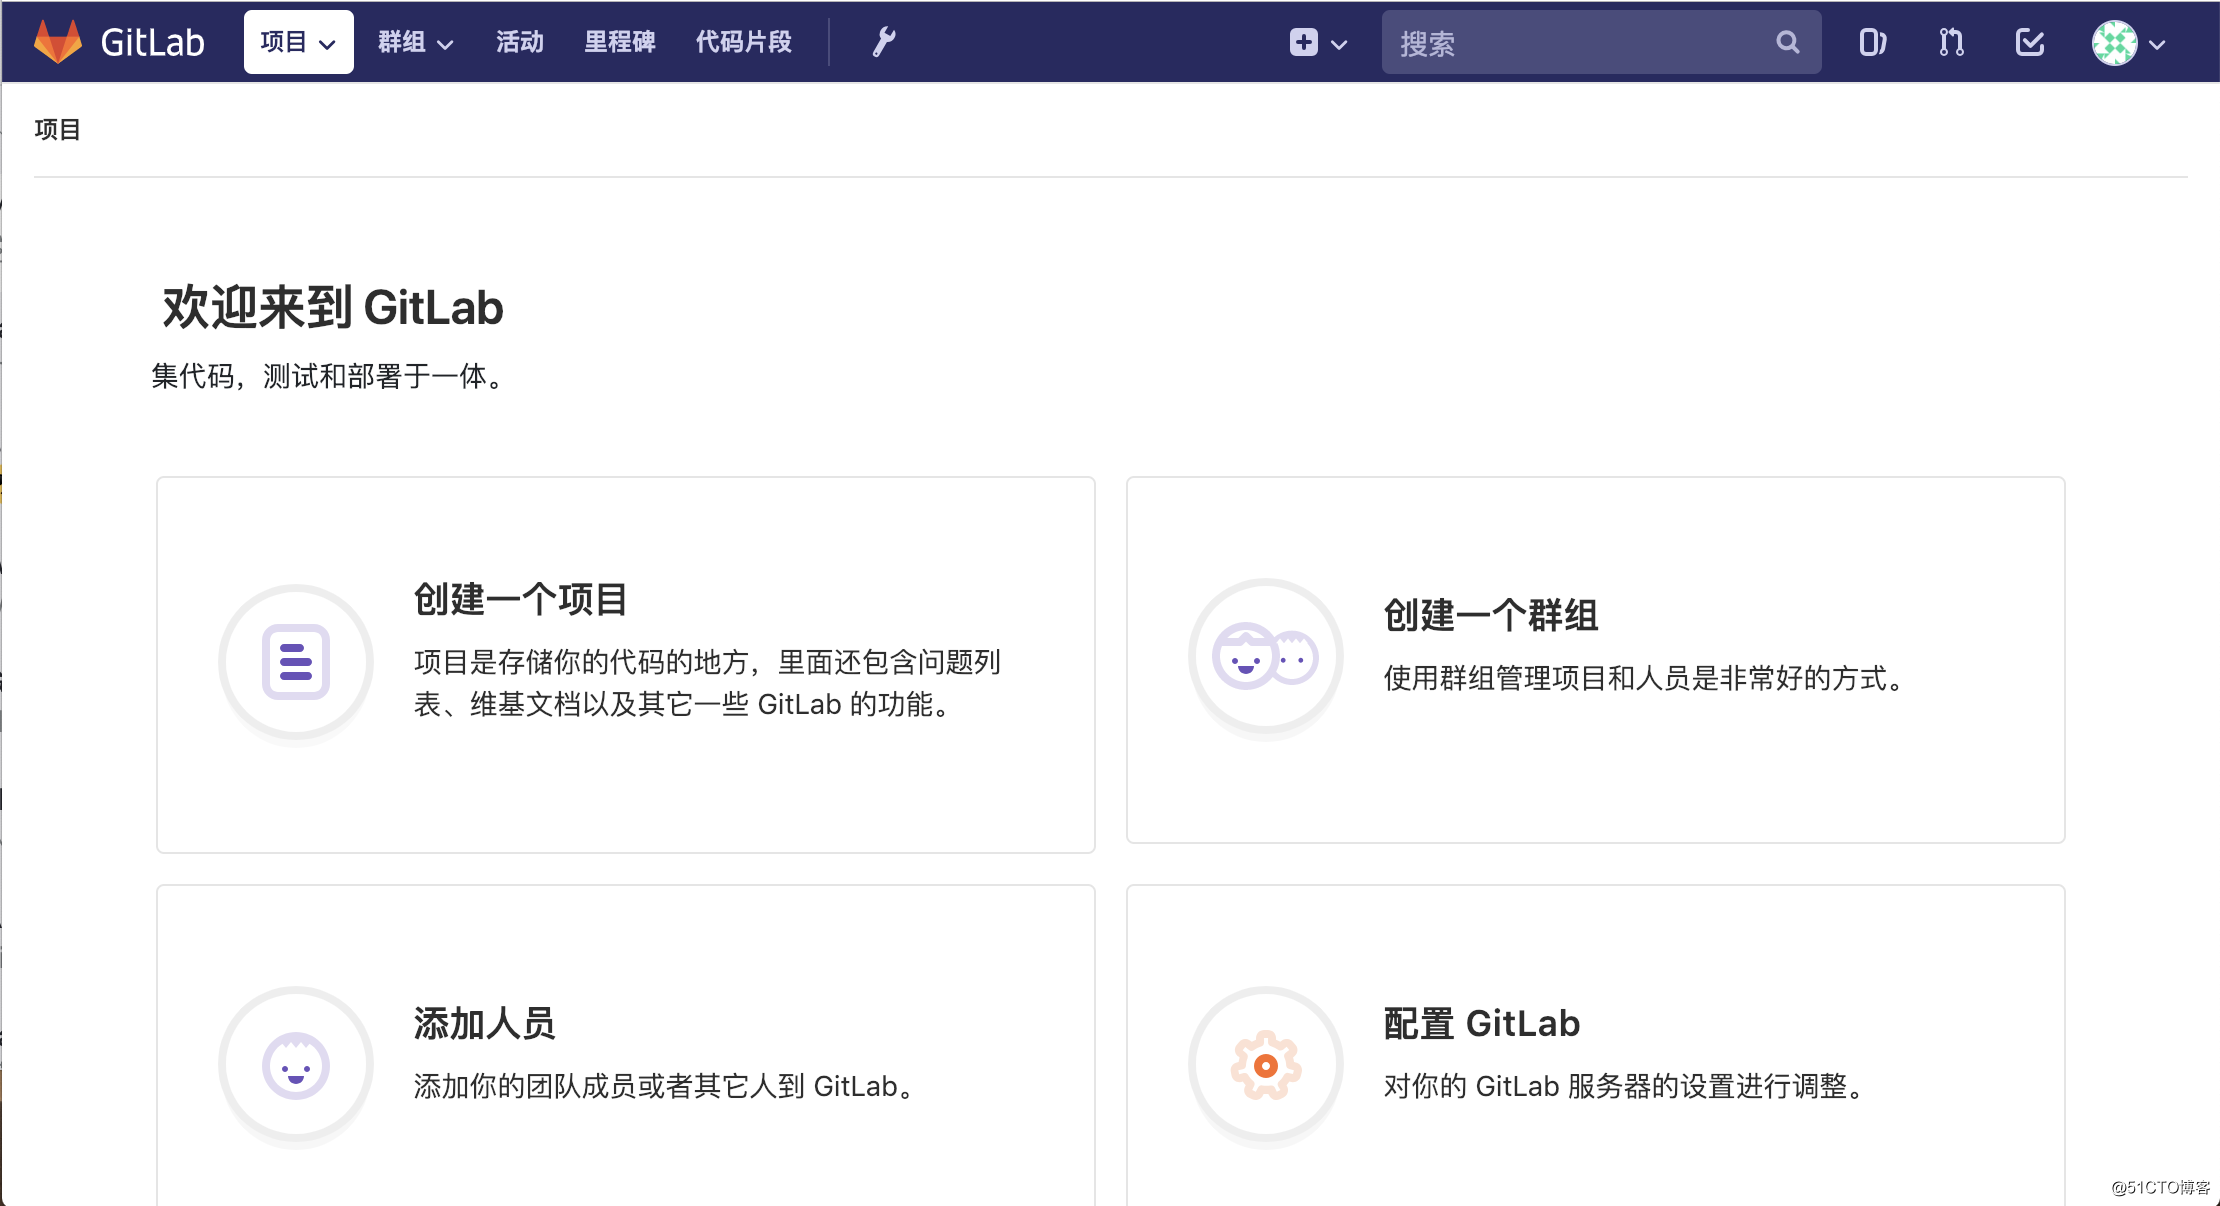 Docker-compose一键部署gitlab中文版